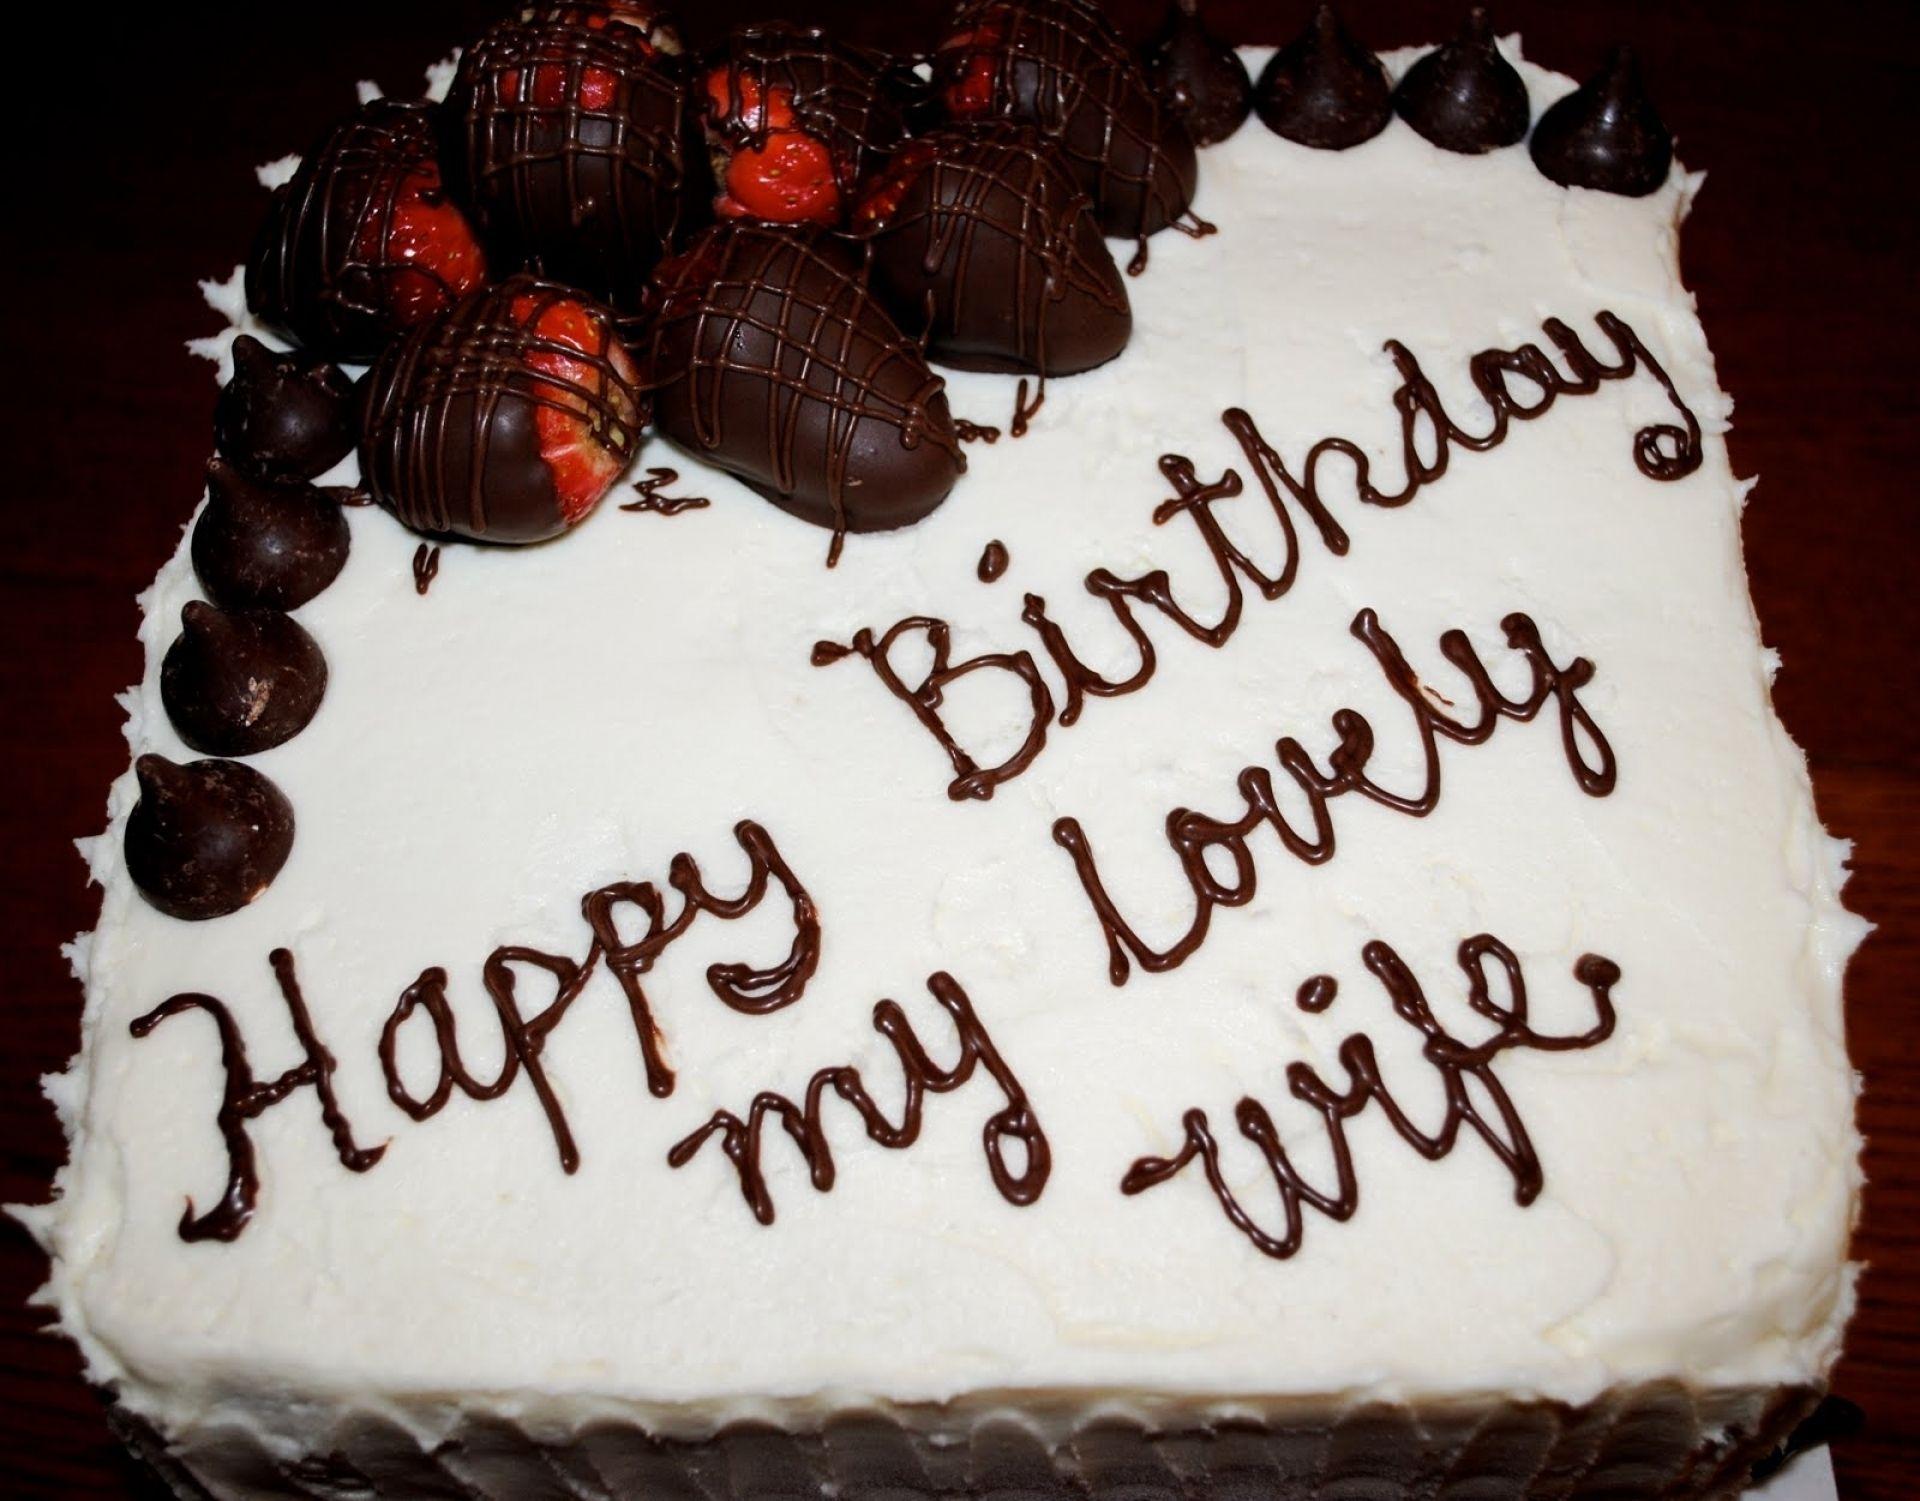 Happy Birthday My Love Cake Image iPhone Wallpaper HD. Lali